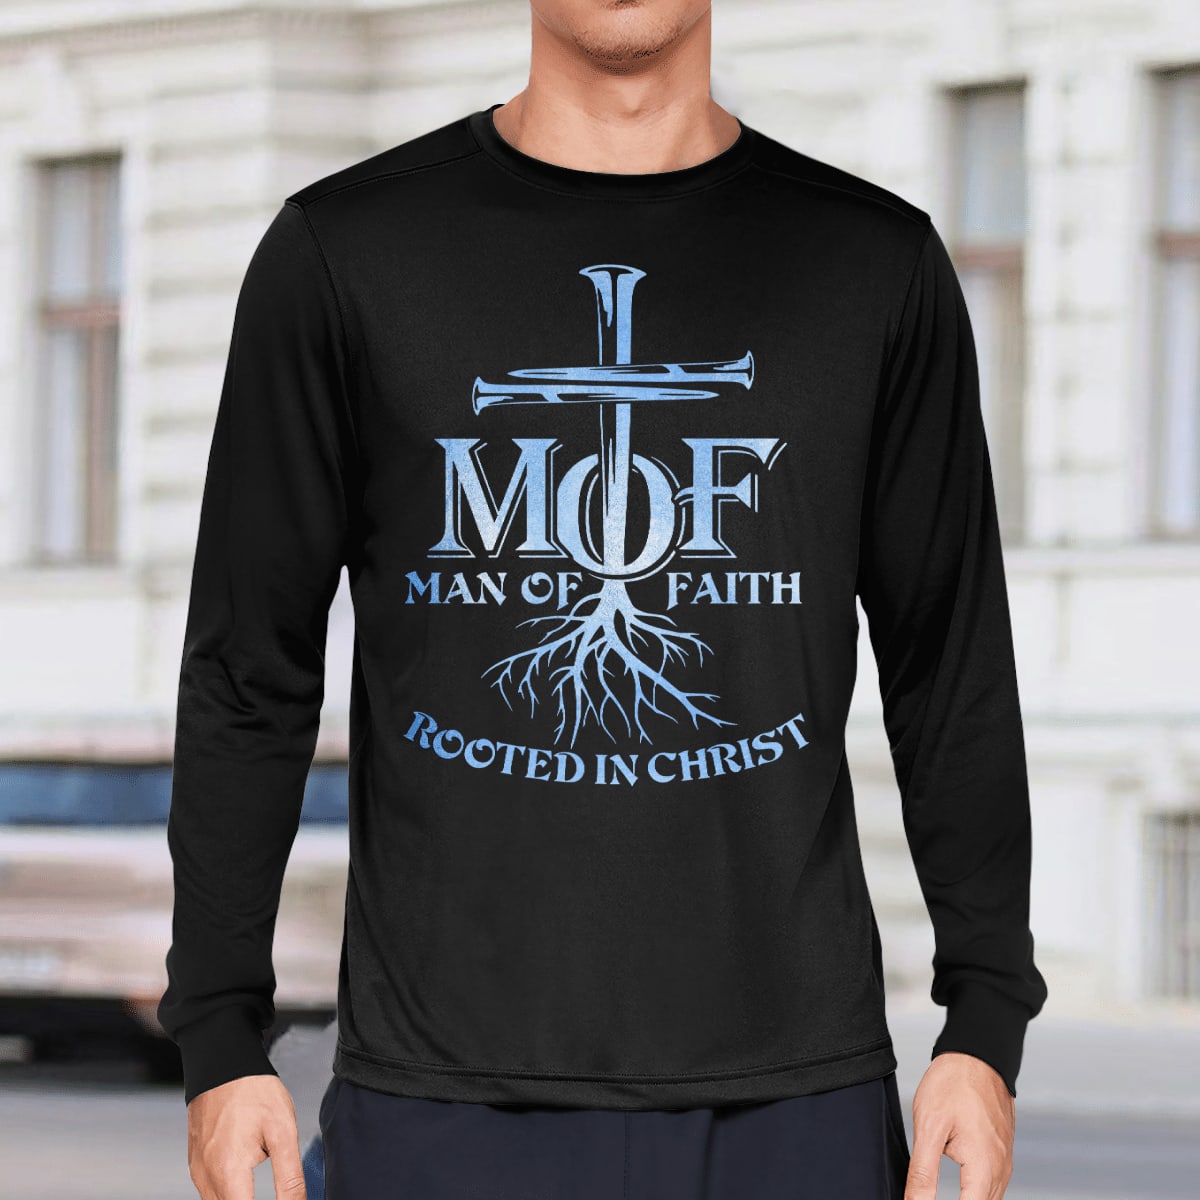 Man Of Faith Rooted In Christ, Christian T-Shirt, Religious T-Shirt, Jesus Sweatshirt Hoodie, God T-Shirt